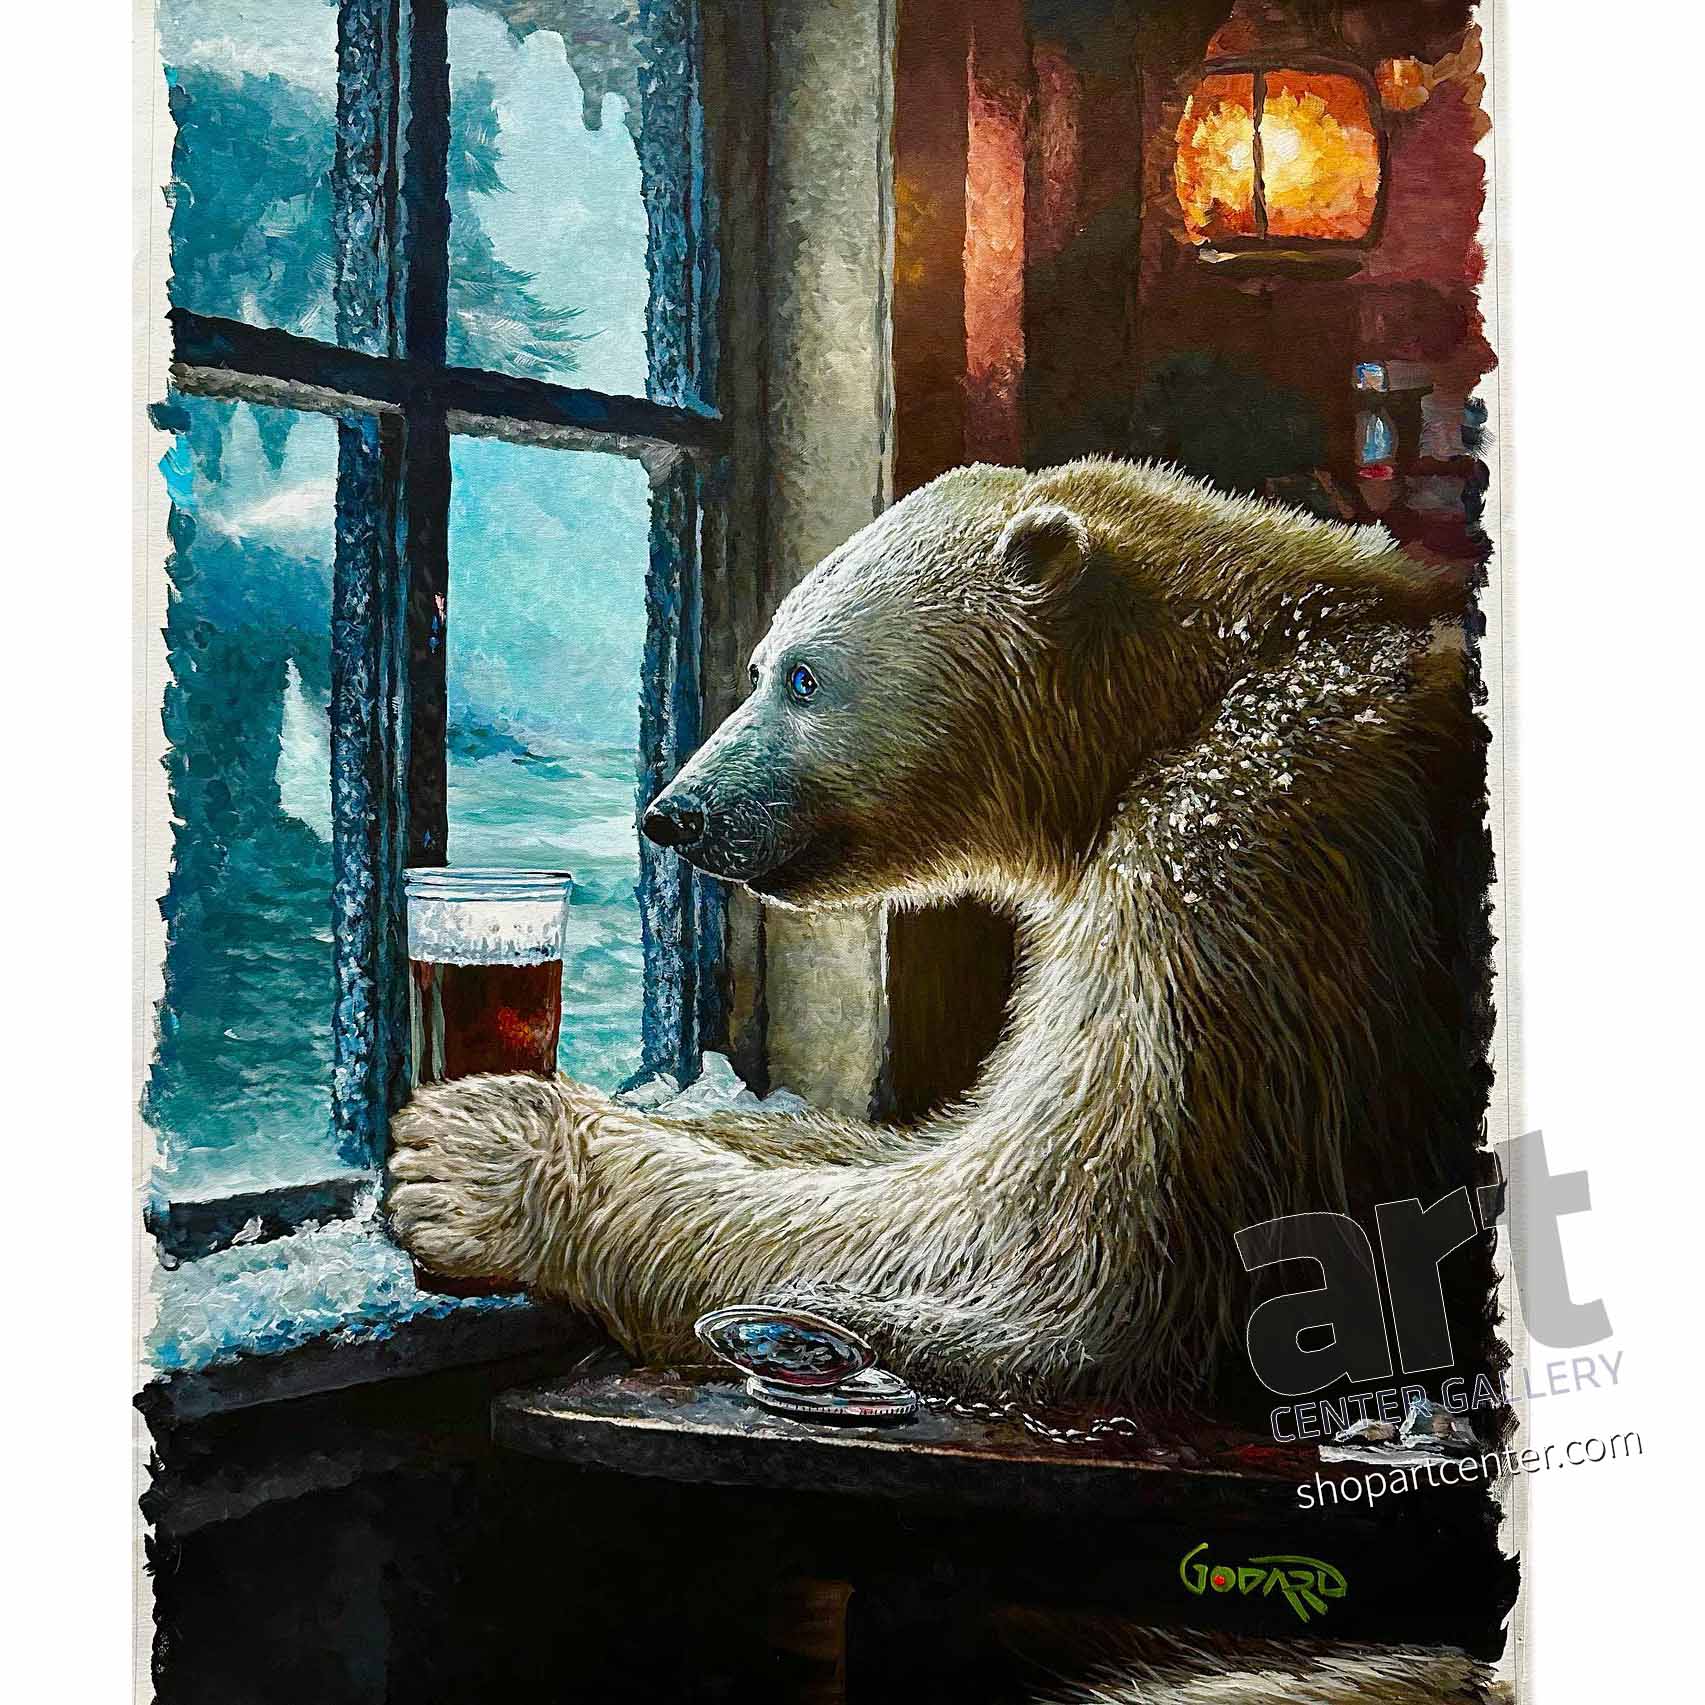 Michael Godard "Polar Beer" Limited Edition Canvas Giclee